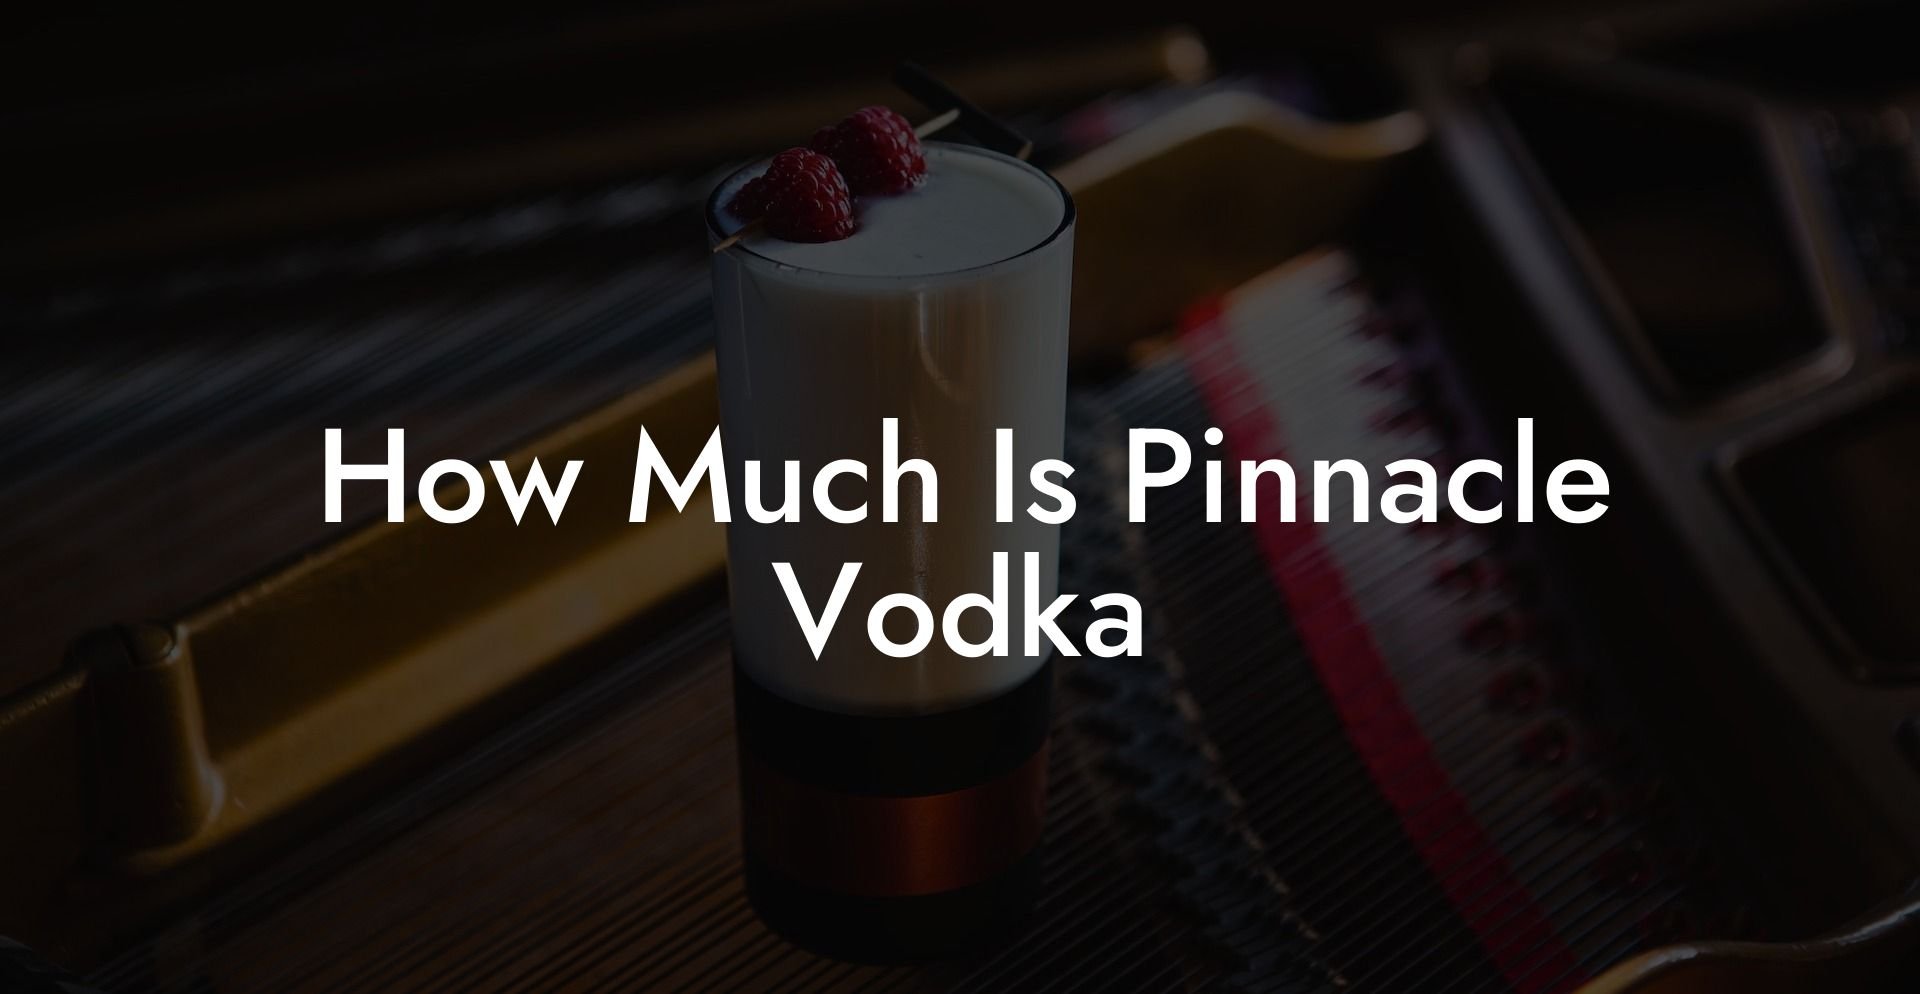 How Much Is Pinnacle Vodka